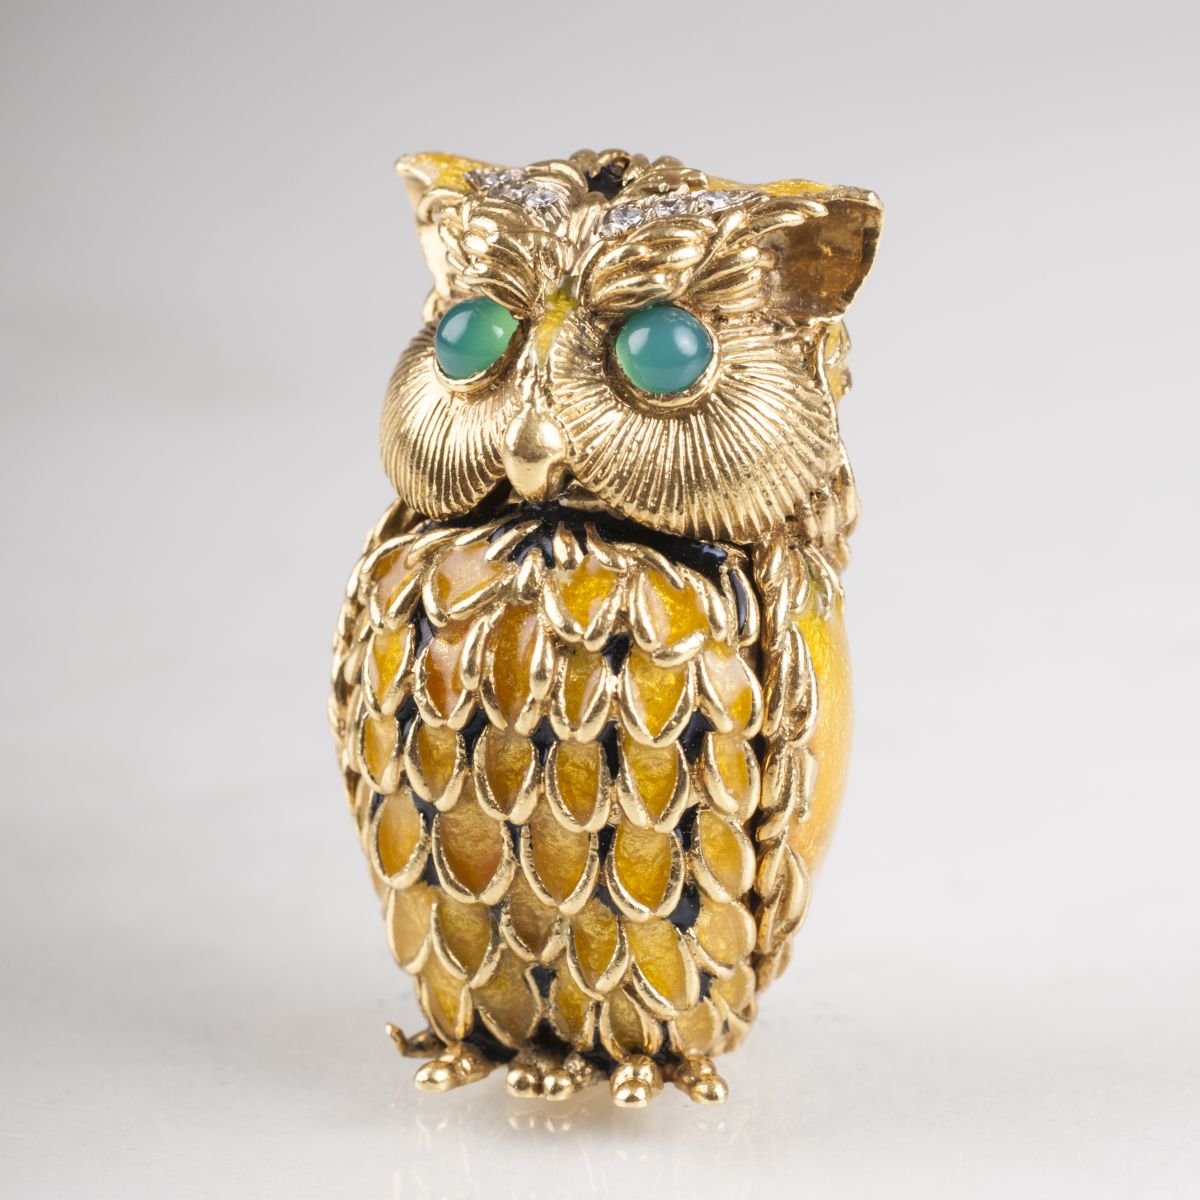 A miniature golden box 'Owl' with diamonds